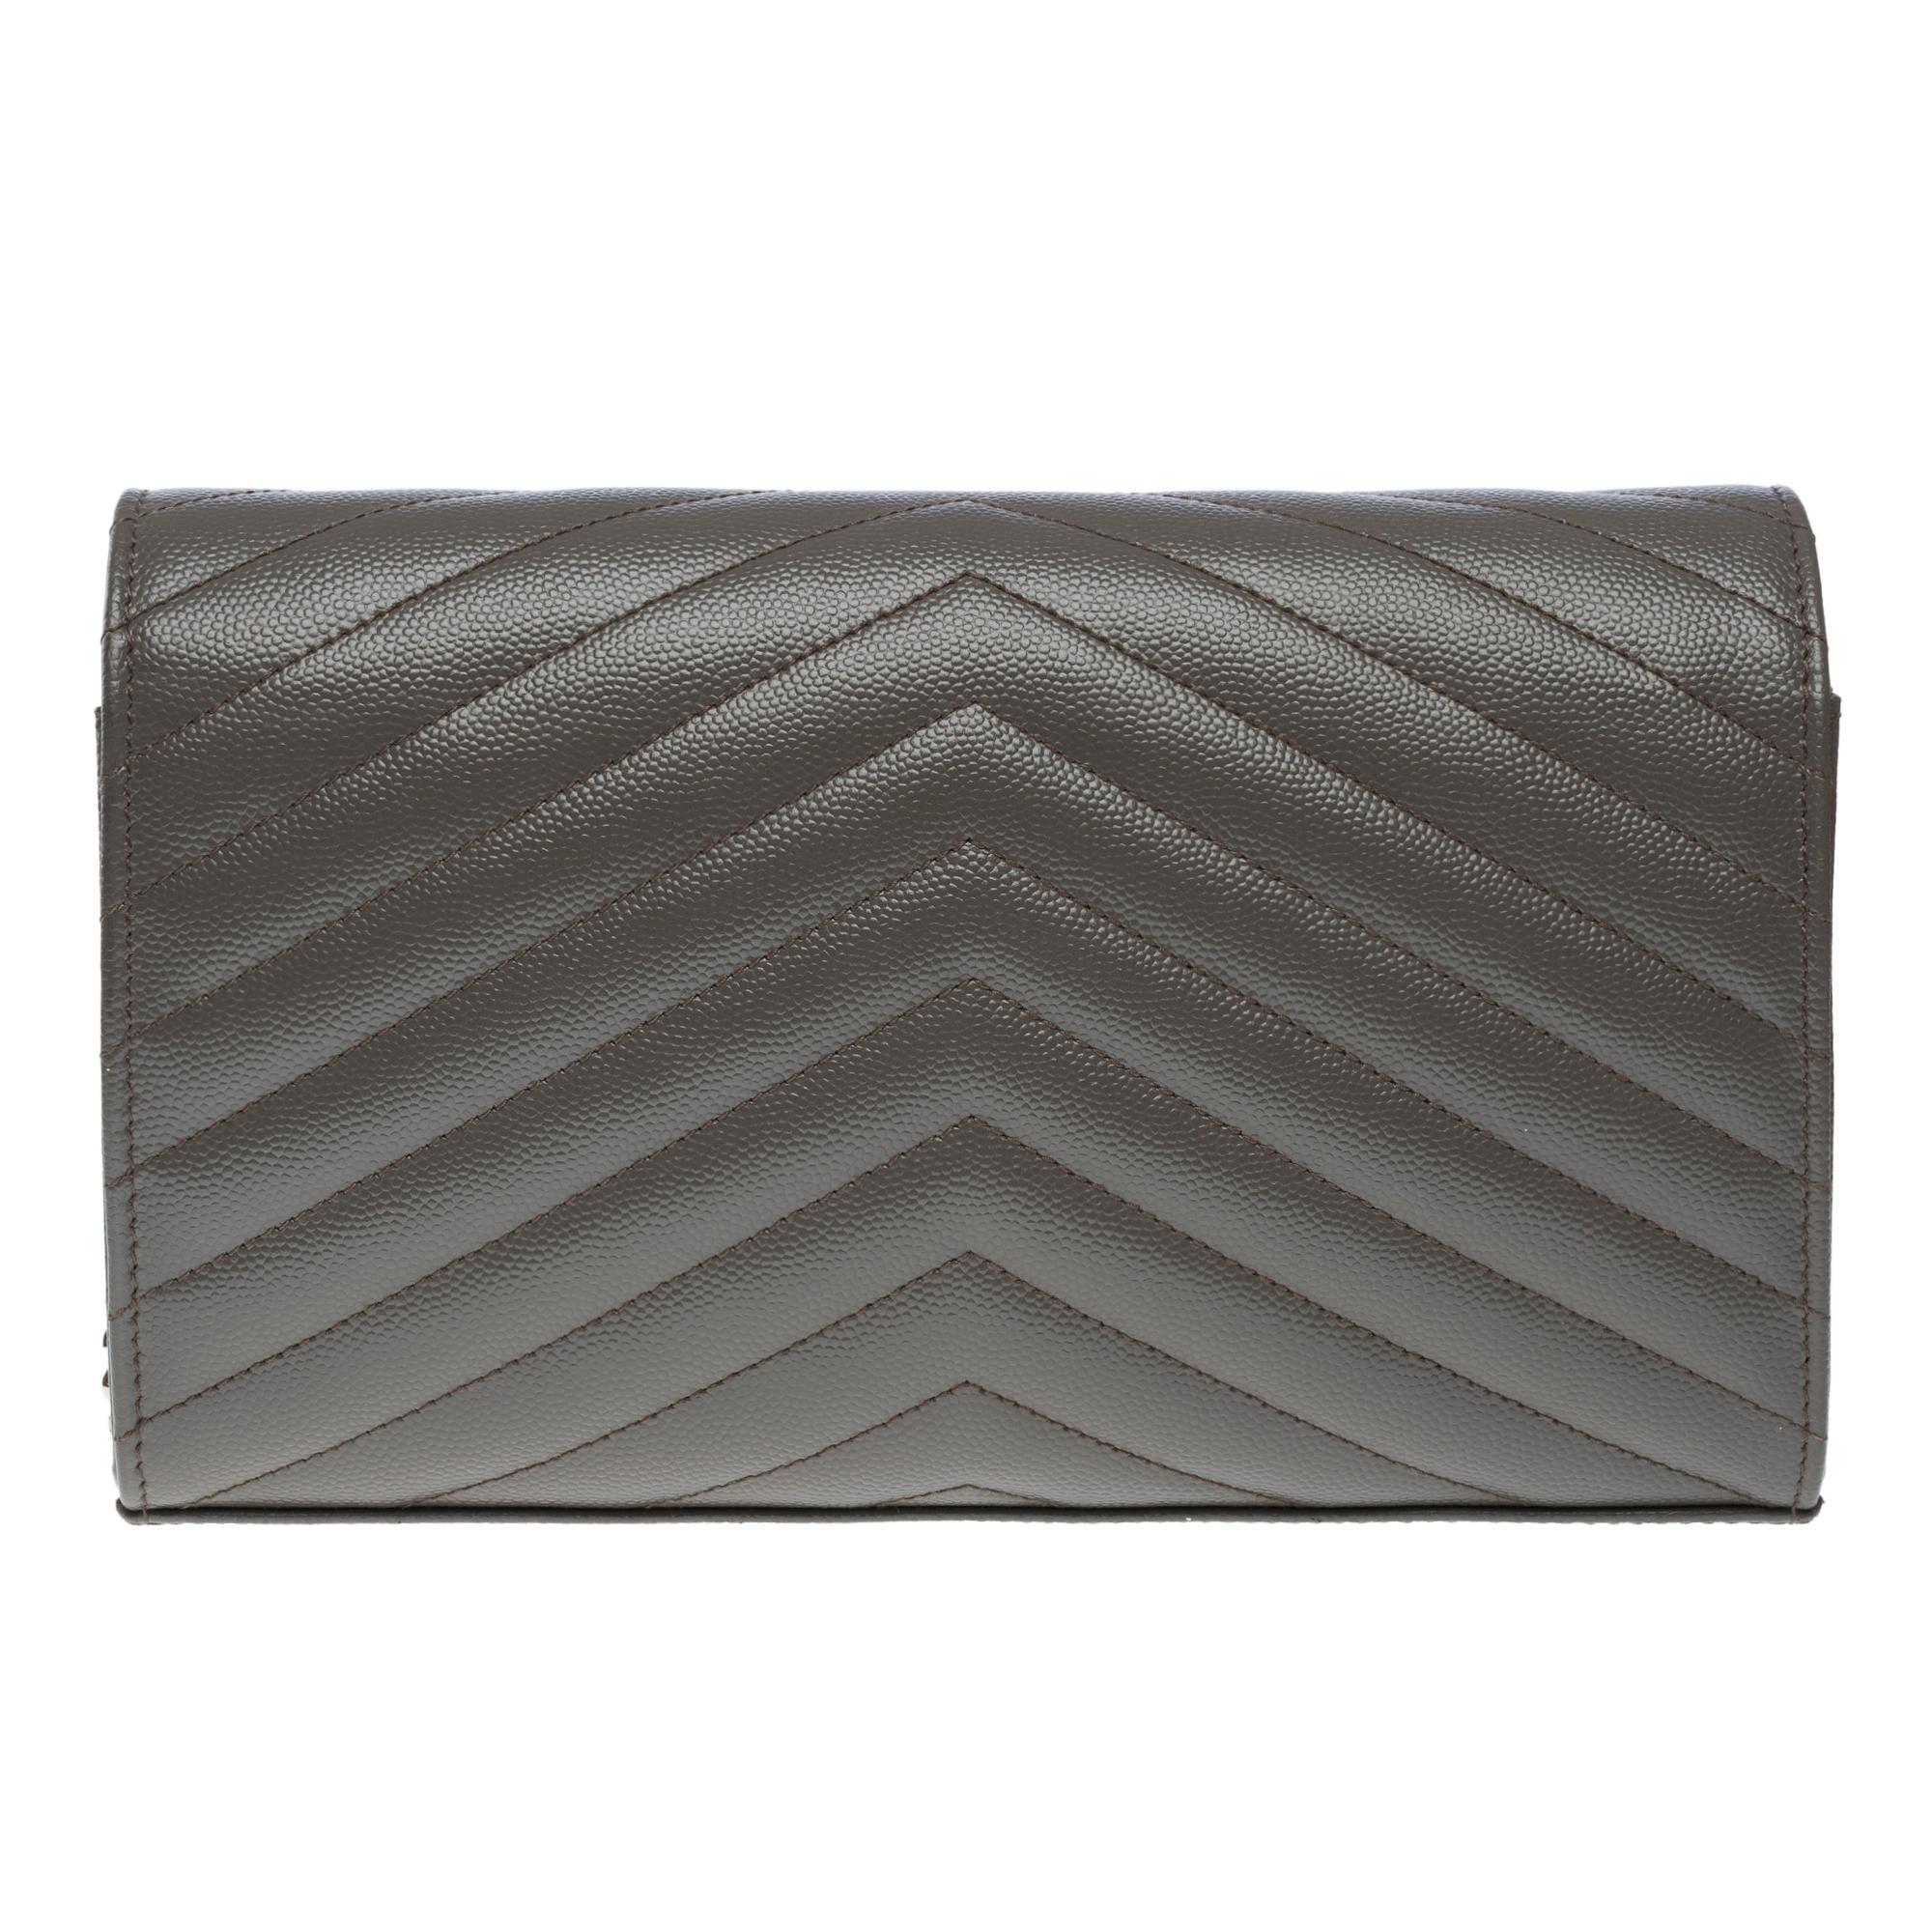 New YSL Pochette Cassandre classic shoulder bag in Grey leather, SHW For Sale 1